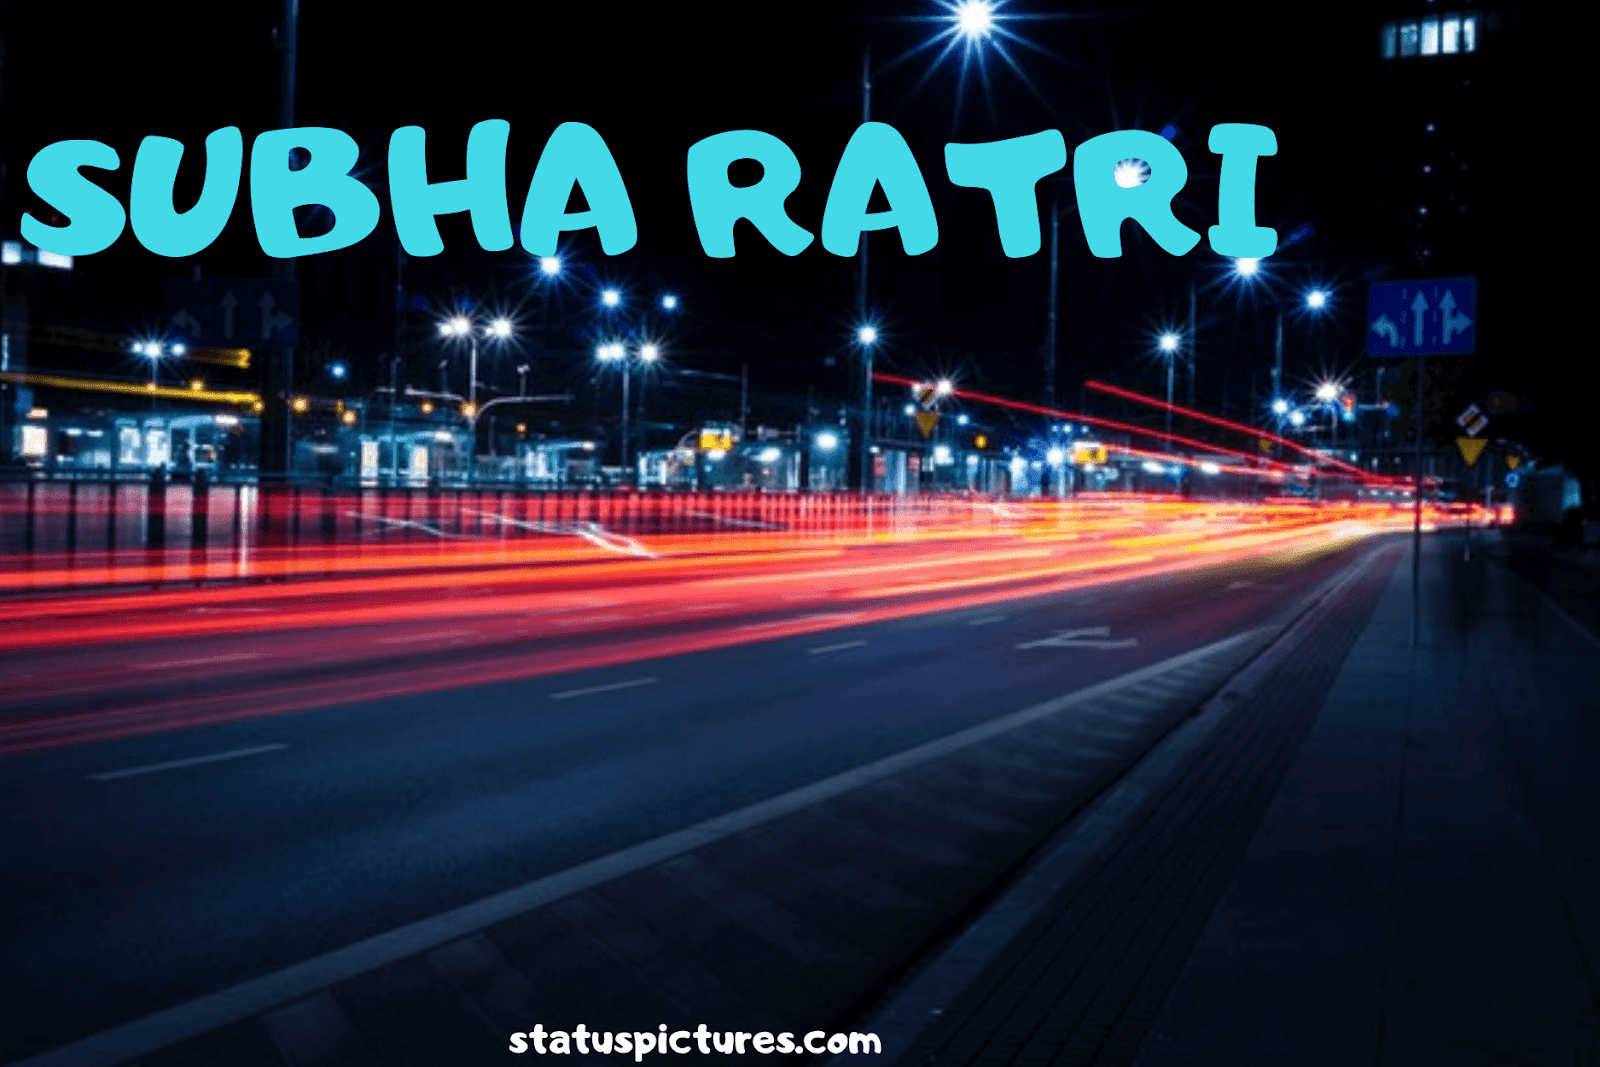 Subha Ratri Good Night Images Odia Hindi Bengali Bihari Free